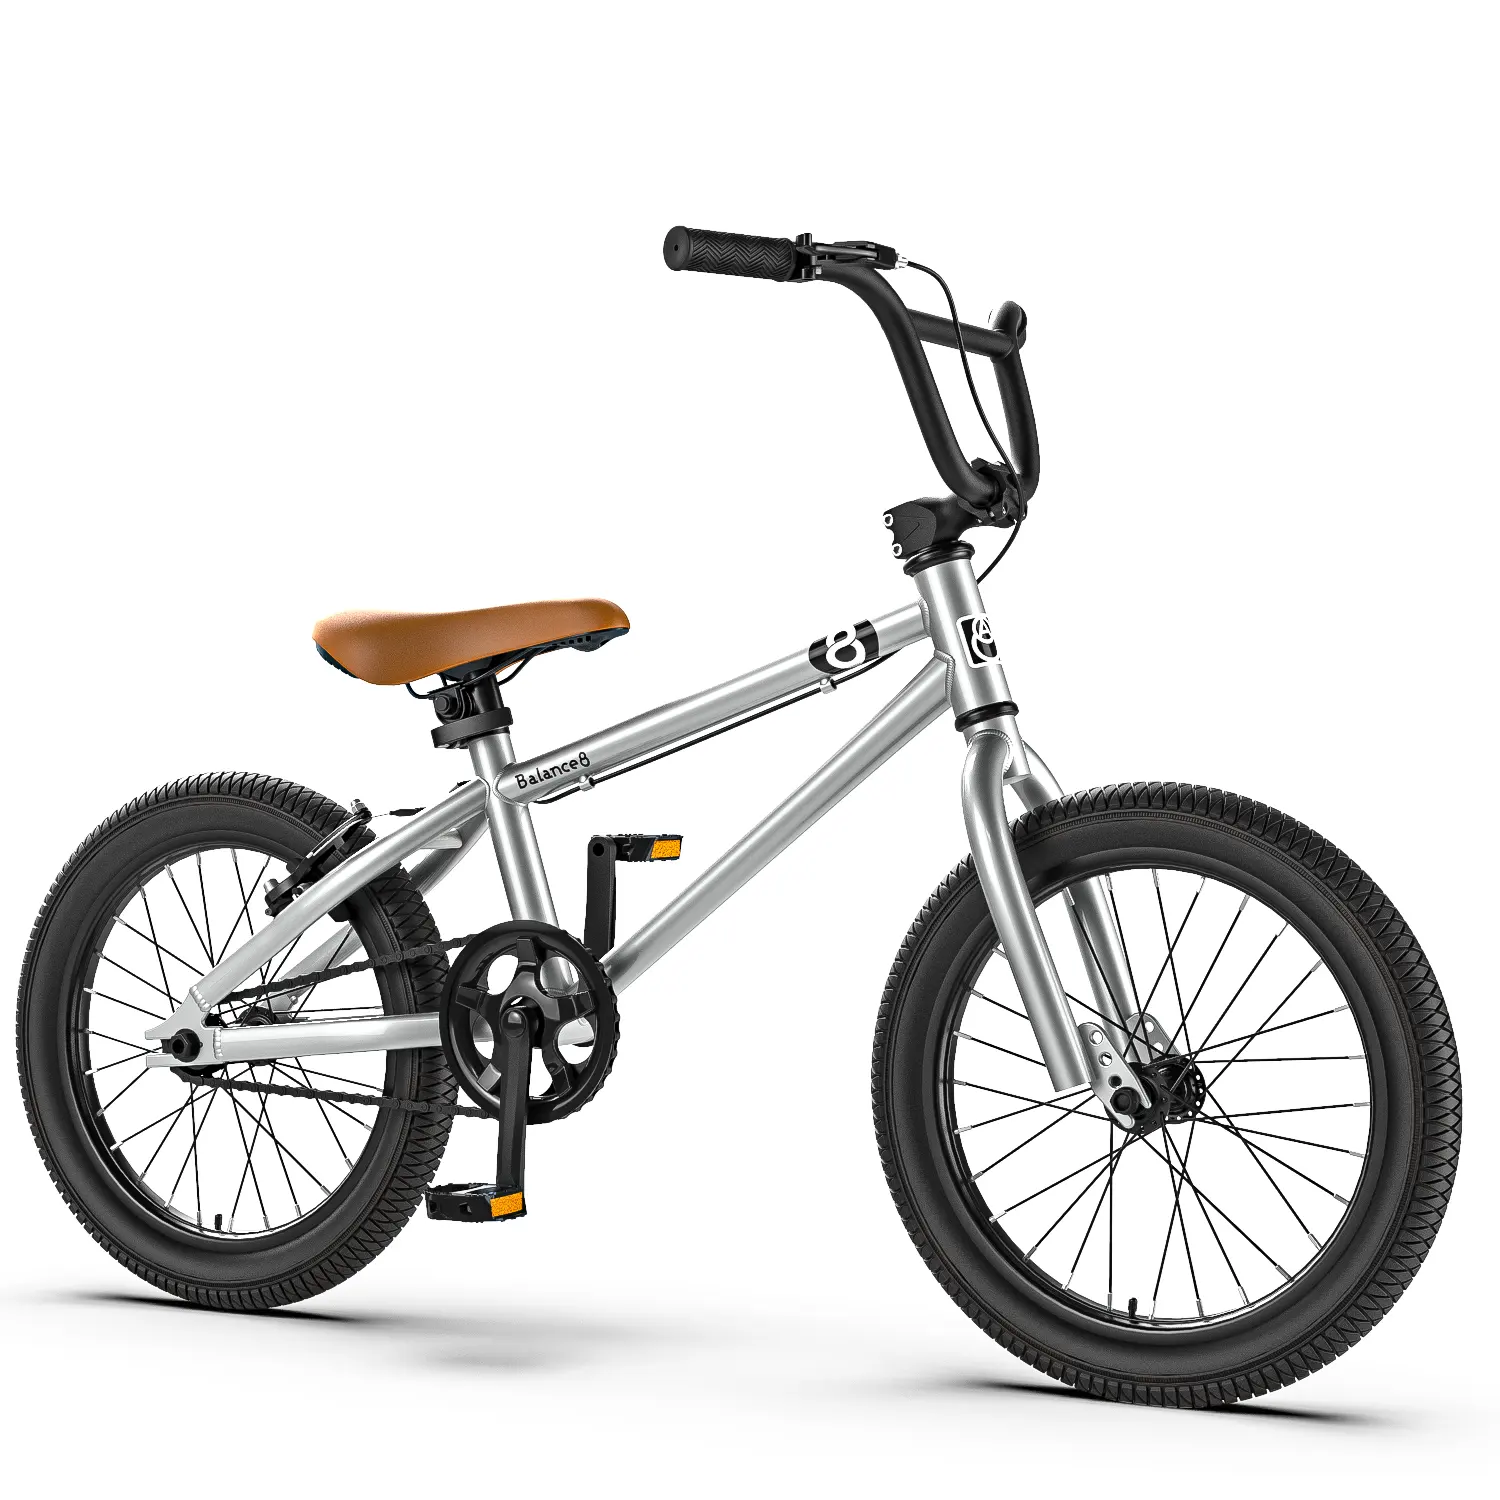 12 '14' 16 '18' 20 'Neues Design Kinder fahrrad/Kinder fahrrad Niedriger Preis für Kinder/OEM Service Gebrauchtes Fahrrad